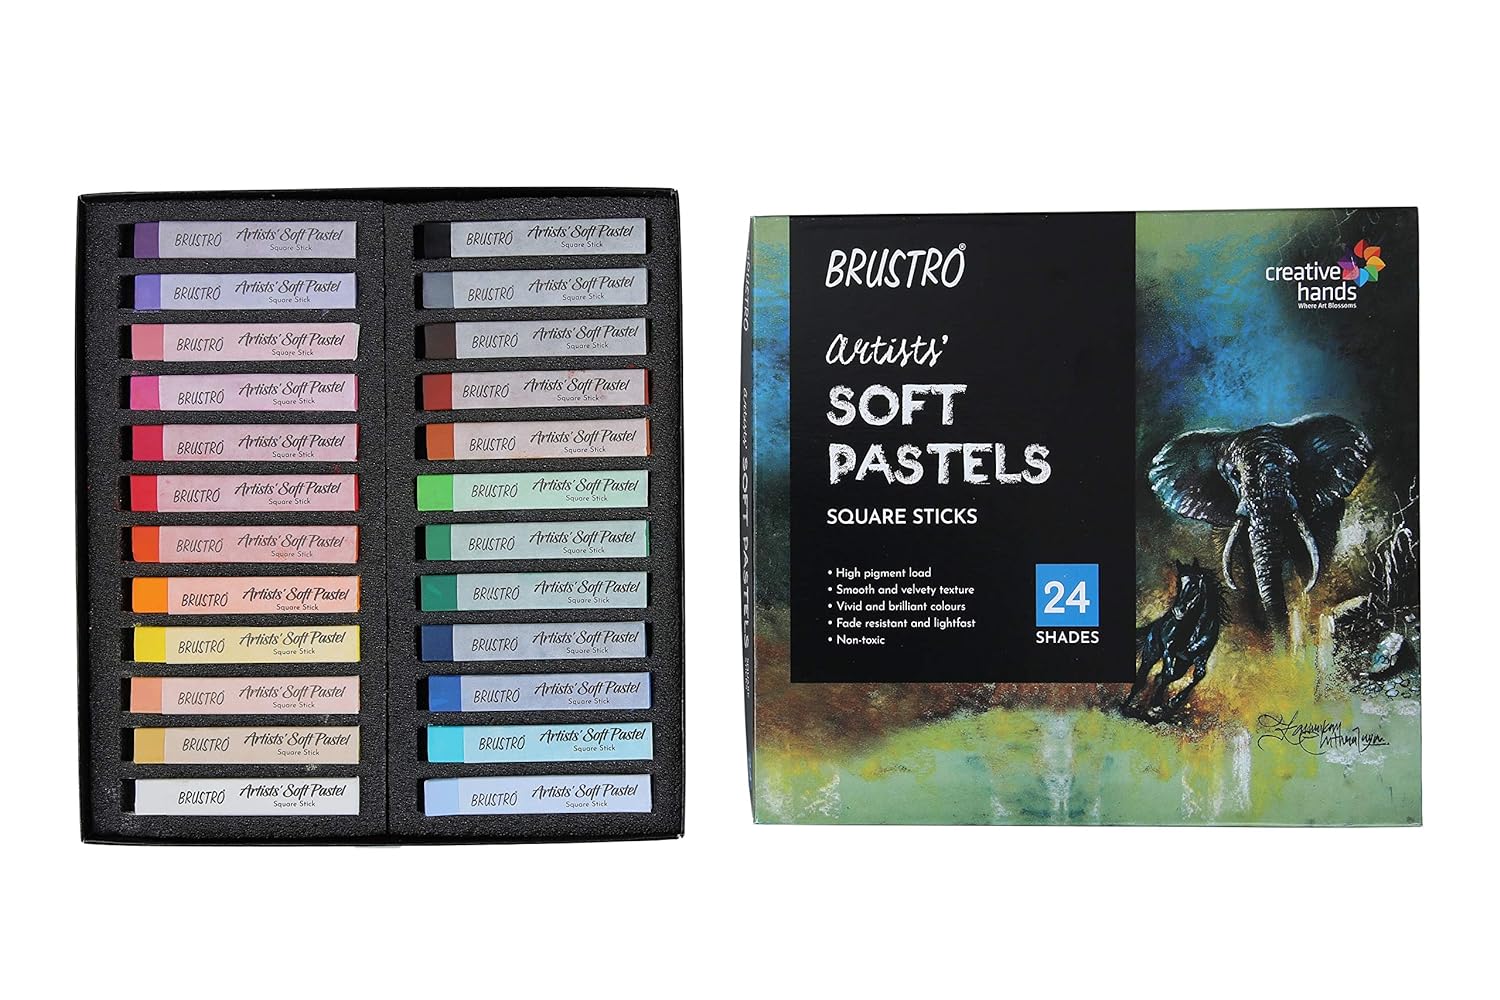 BRUSTRO Artists Soft Pastels Set of 24